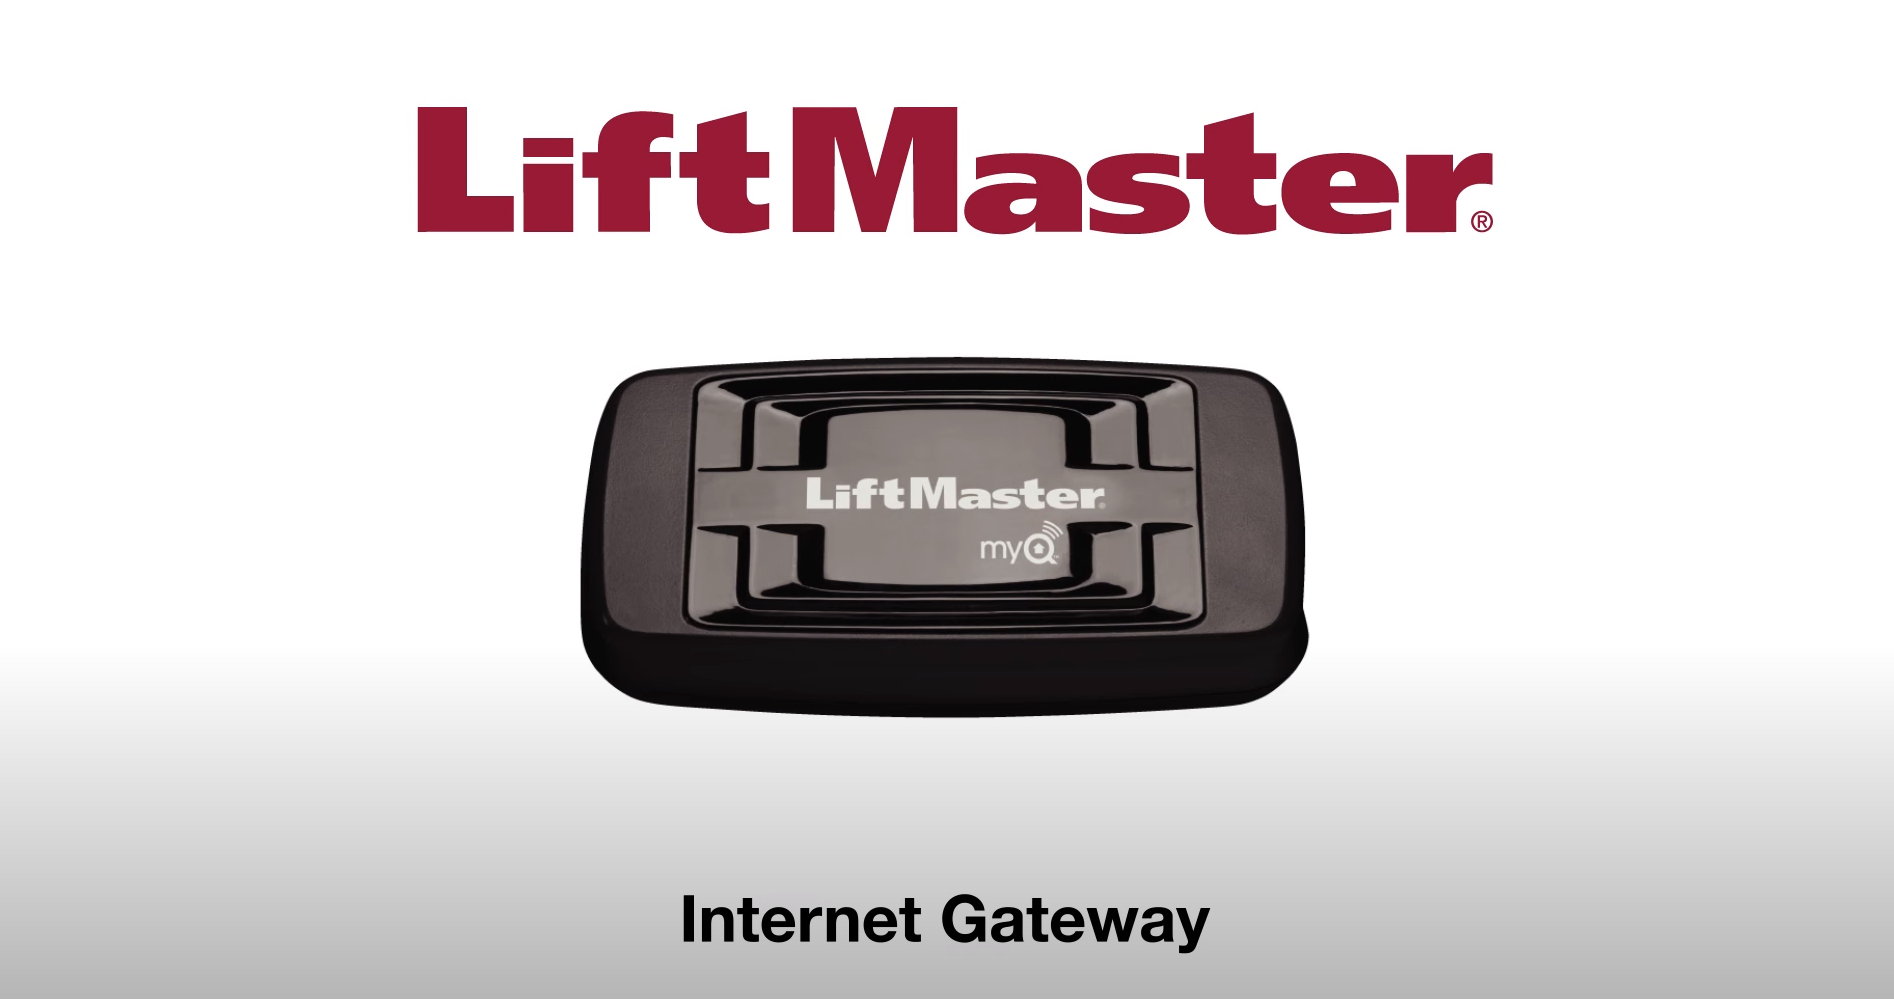 MyQ Internet Gateway from LiftMaster